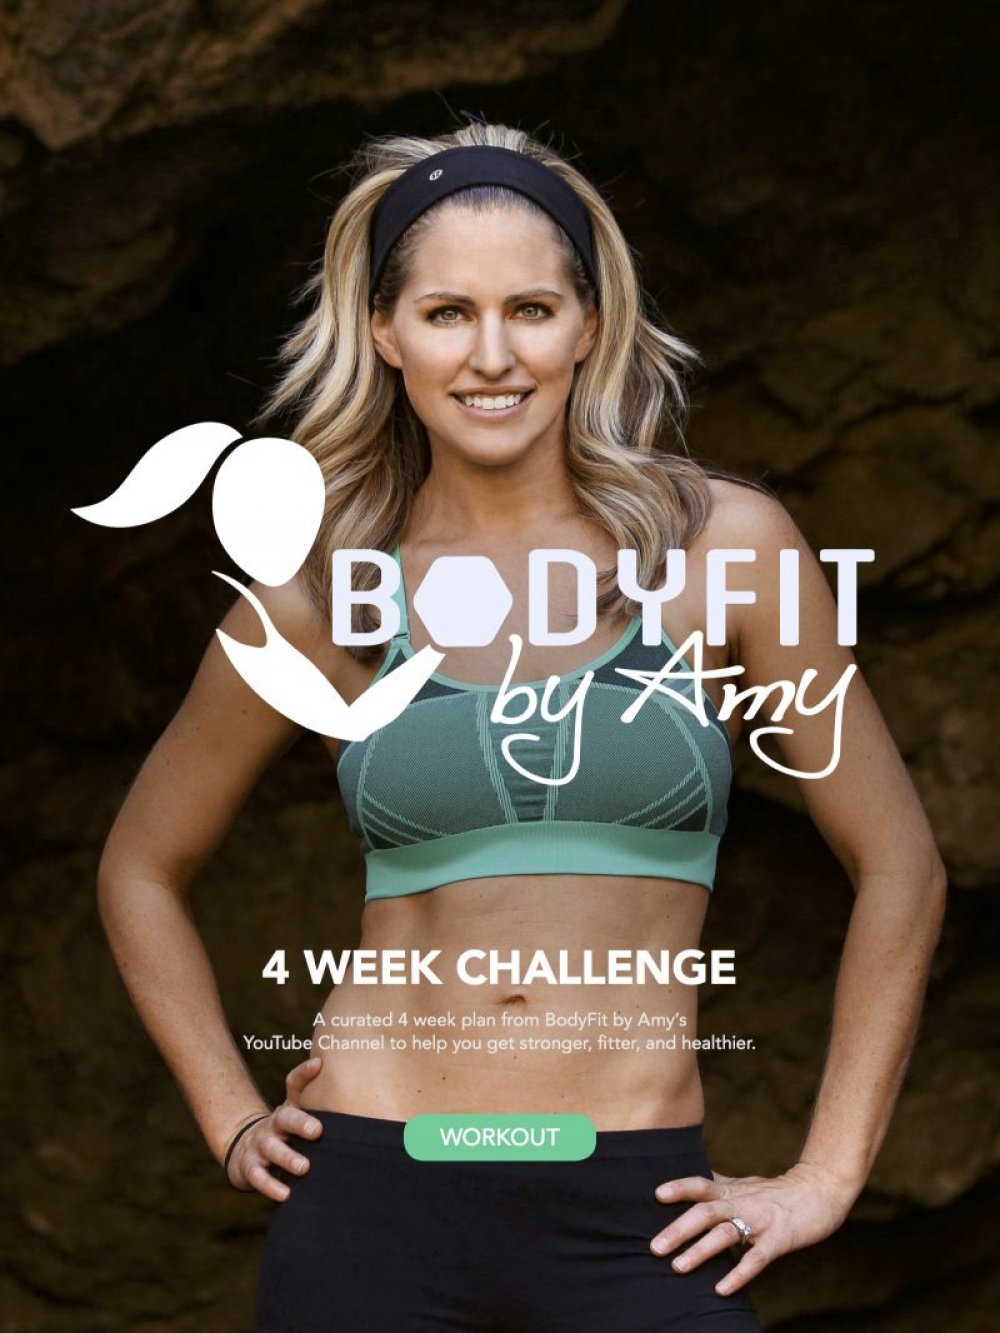 4 Week Challenge - Bodyfit by Amy